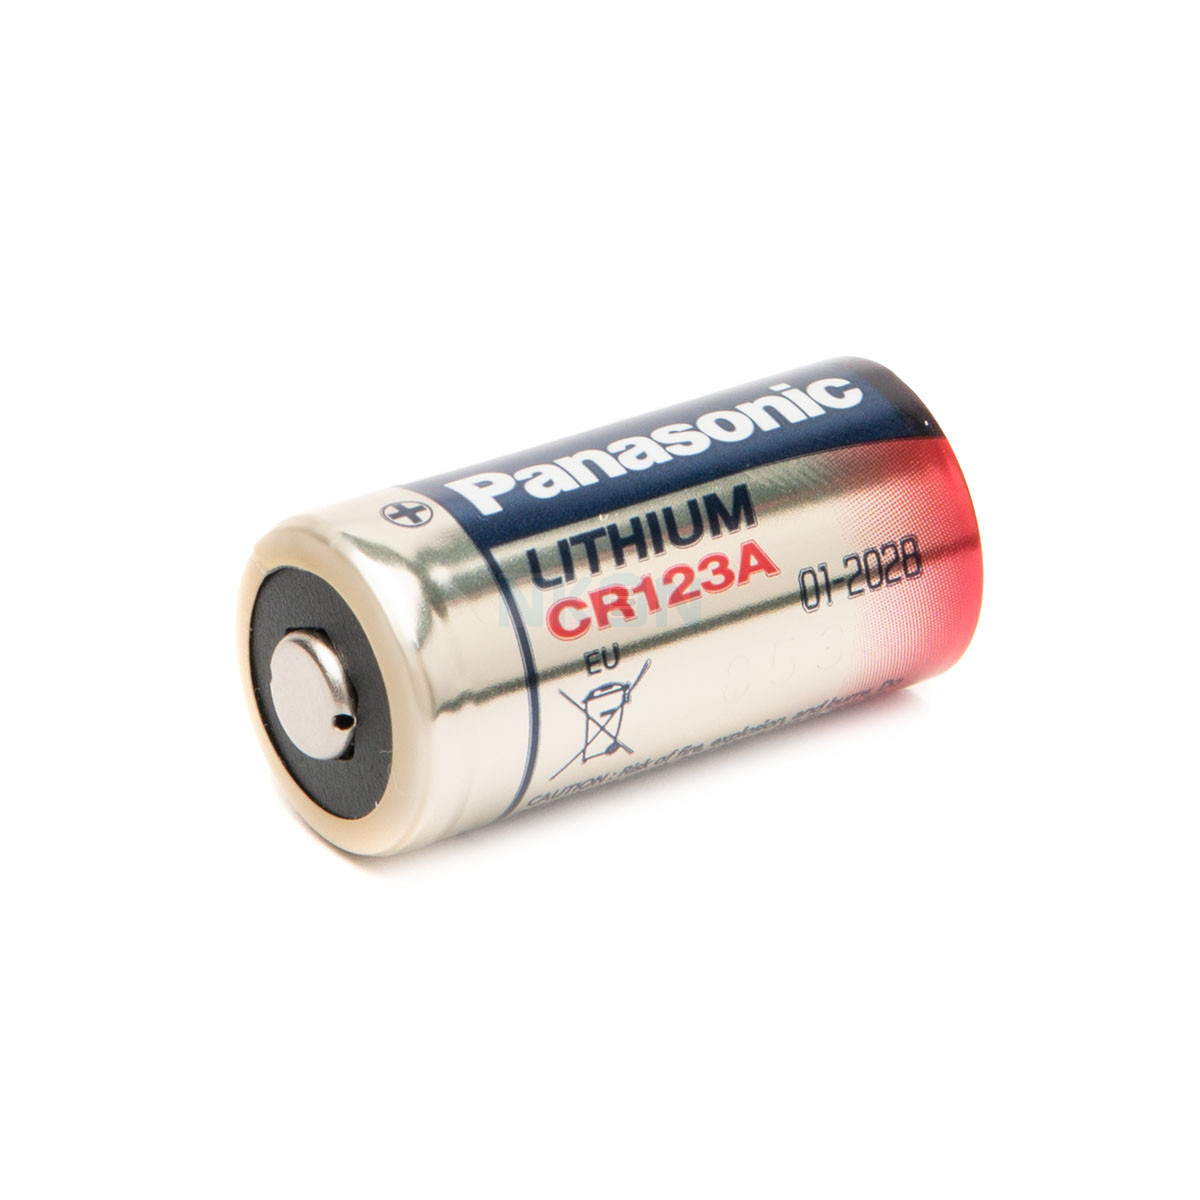 Panasonic CR123 3V Photo Lithium Batteries 4pc for StreamLight